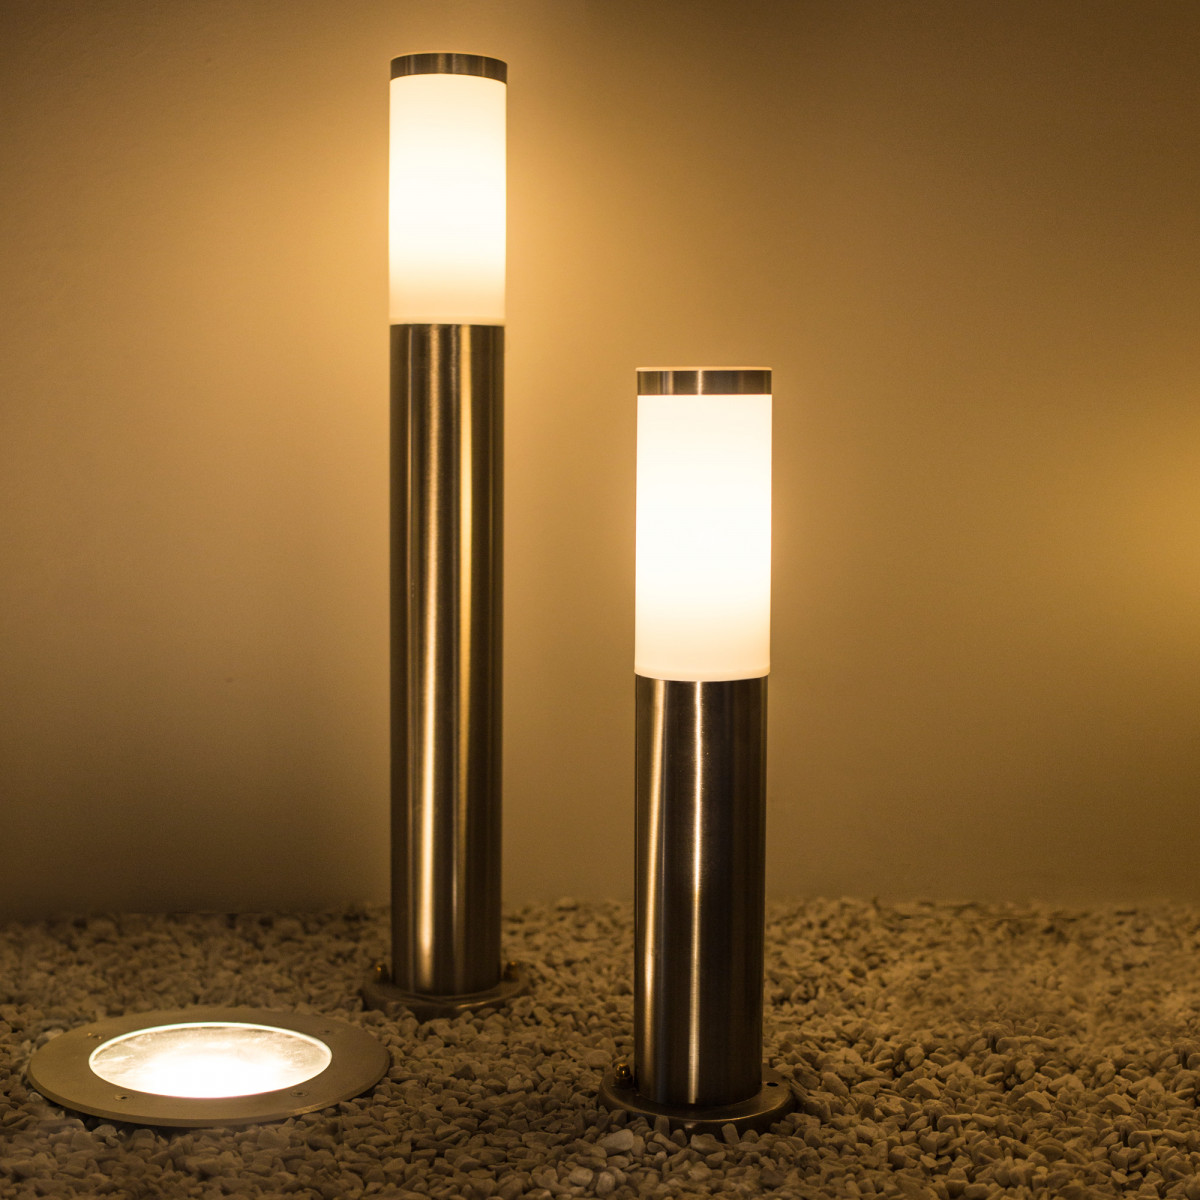 Set de 3 lampes de jardin Lech 2 (3x7029) acier inoxydable de KS Lighting